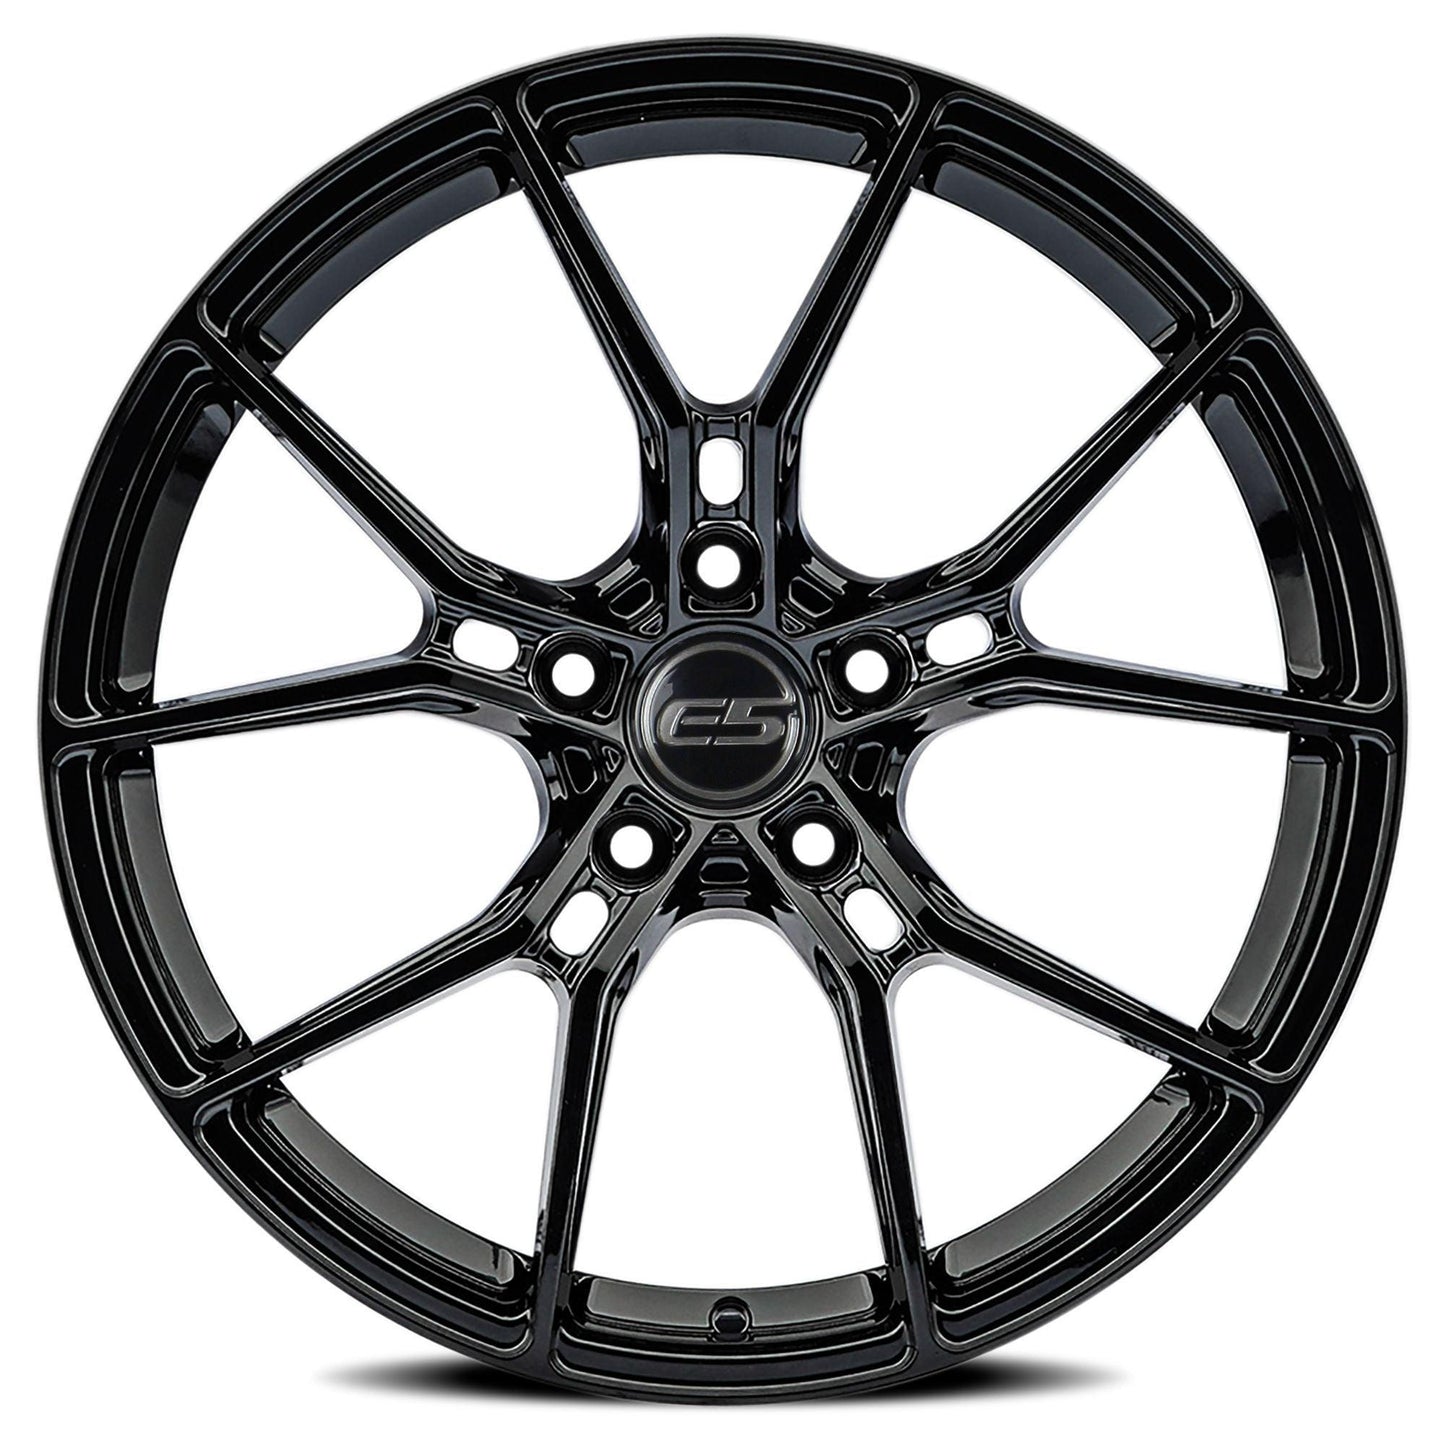 E5 Daytona 19x10 / 20x12 wheels for C6 Corvette Z51 Z06 / Grand Sport - Gem Motorsports